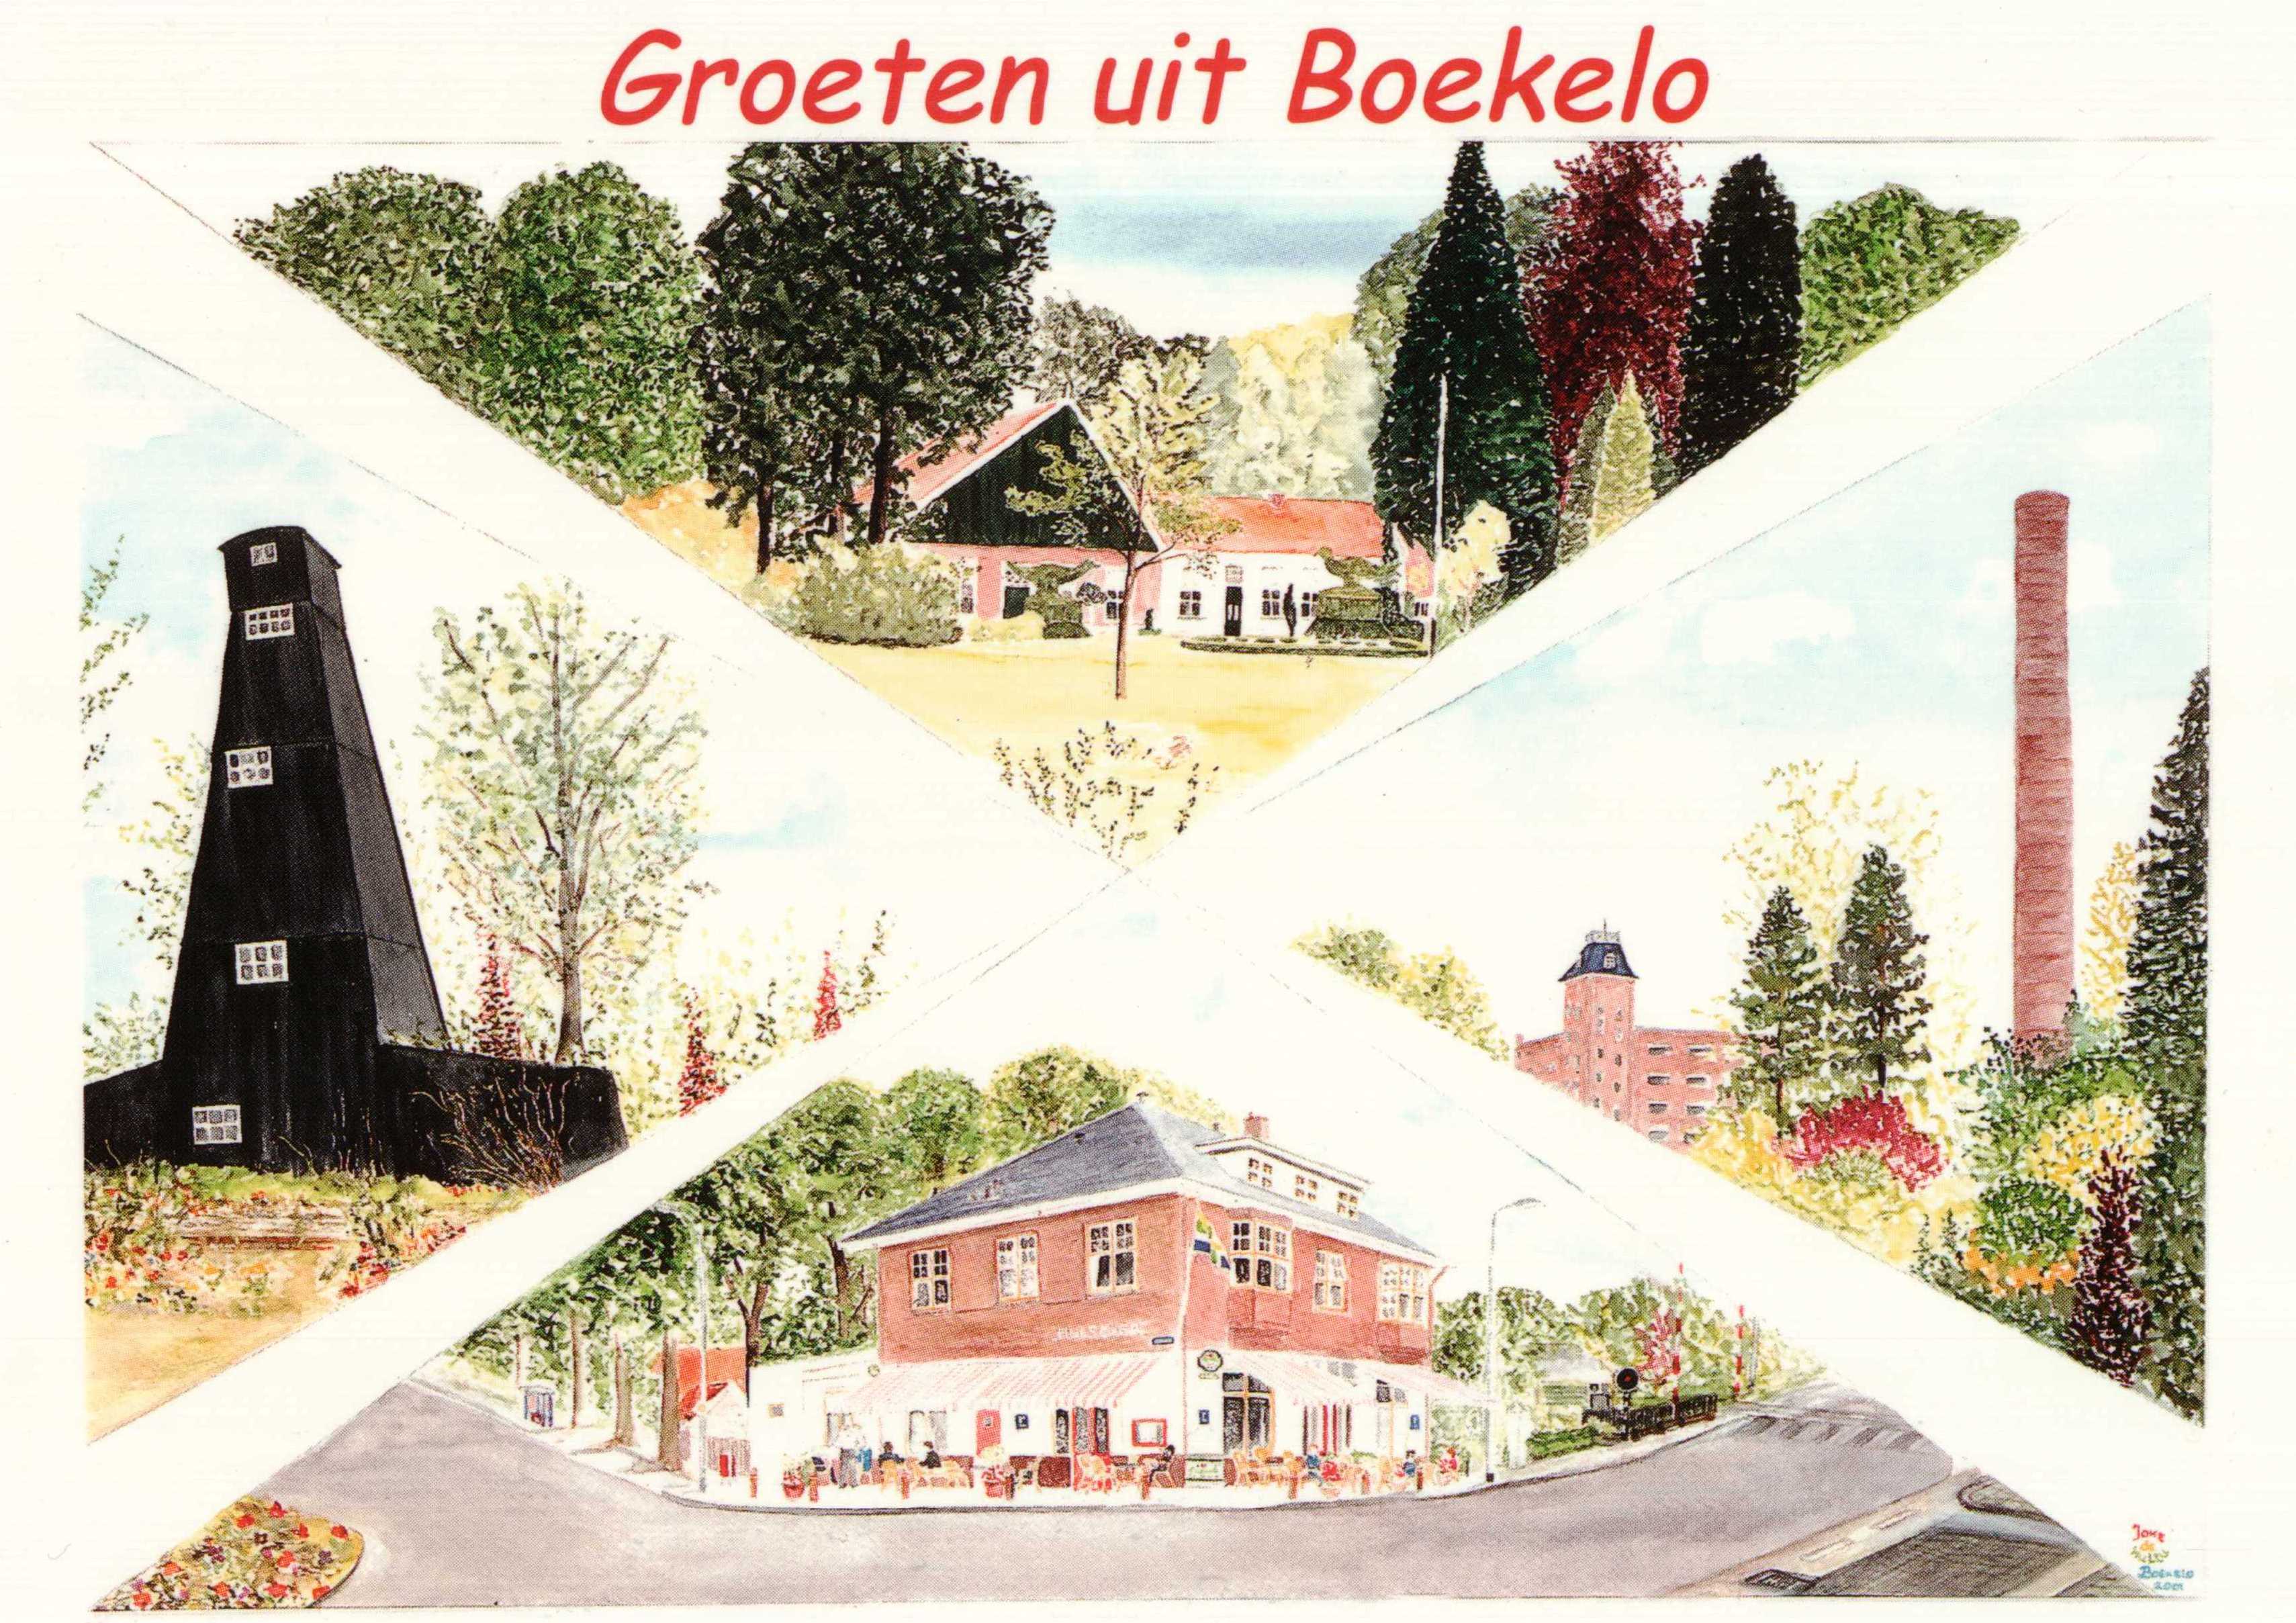 Boekelo-groeten-uit-ong-1986-4005b68e.jpg